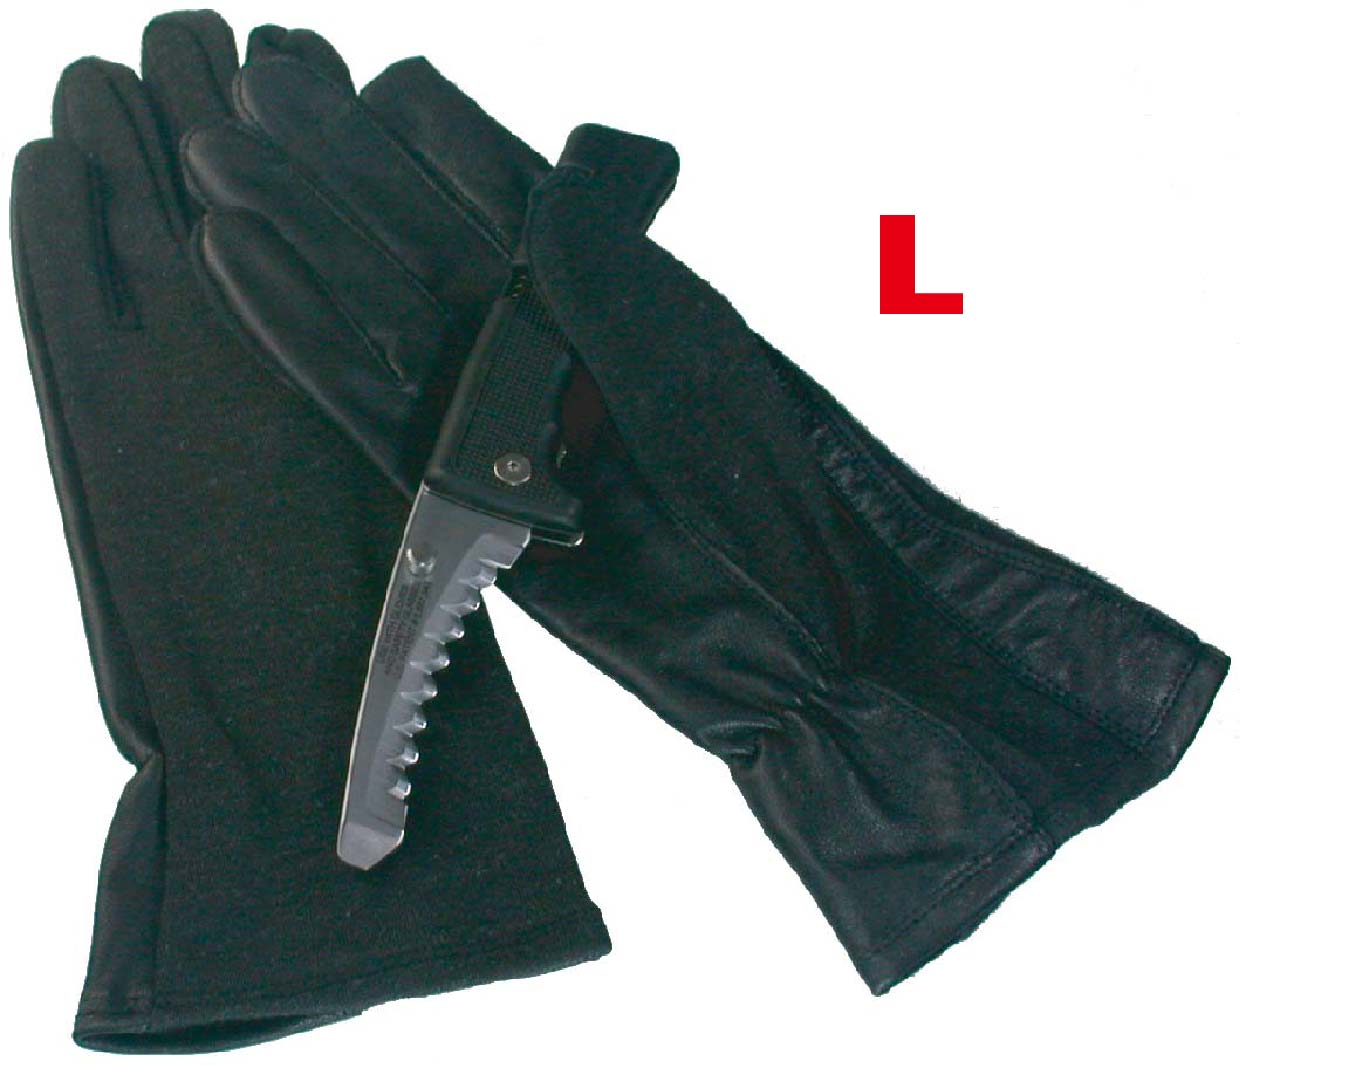 MIL-FORCE ミルフォース ノーメックス/本革 パイロットグラブ  手袋 ブラック Lサイズ PG-05P-BK-L